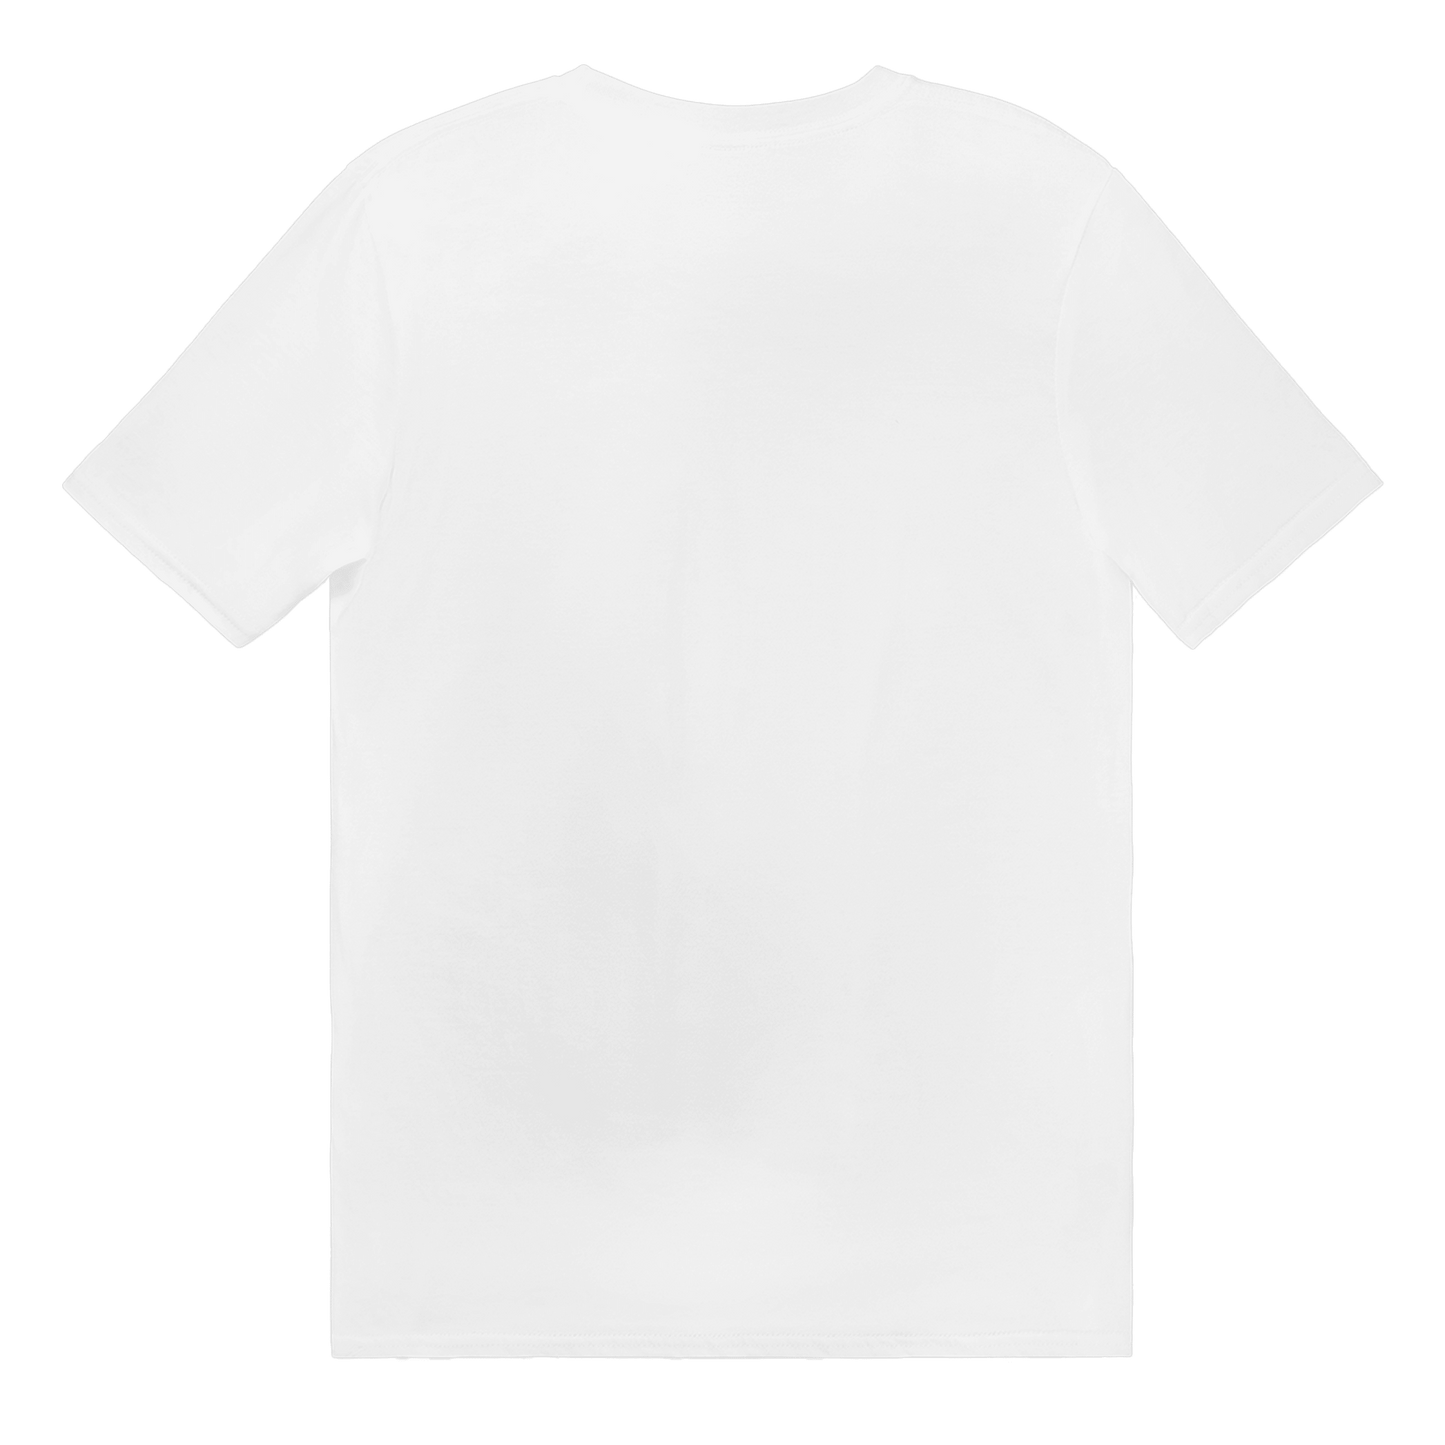 Kantarelltoast - T-shirt 